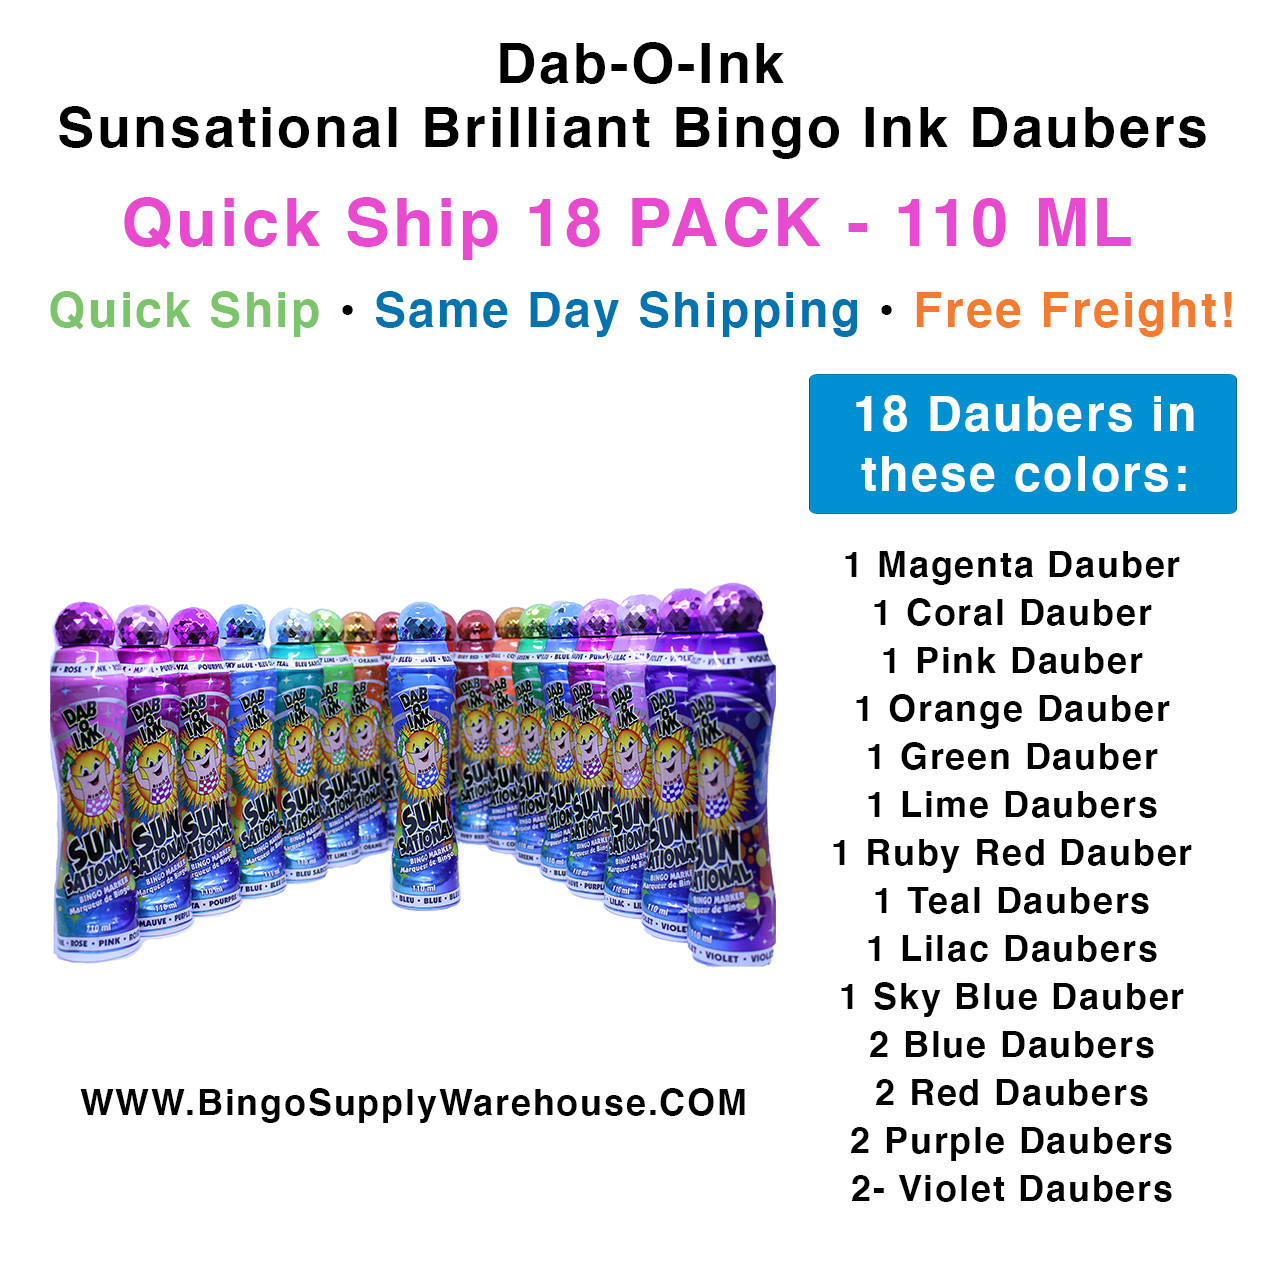 Dab-O-Ink Bingo Daubers - 12 Pack - Green - 3 ounce size - Bingo